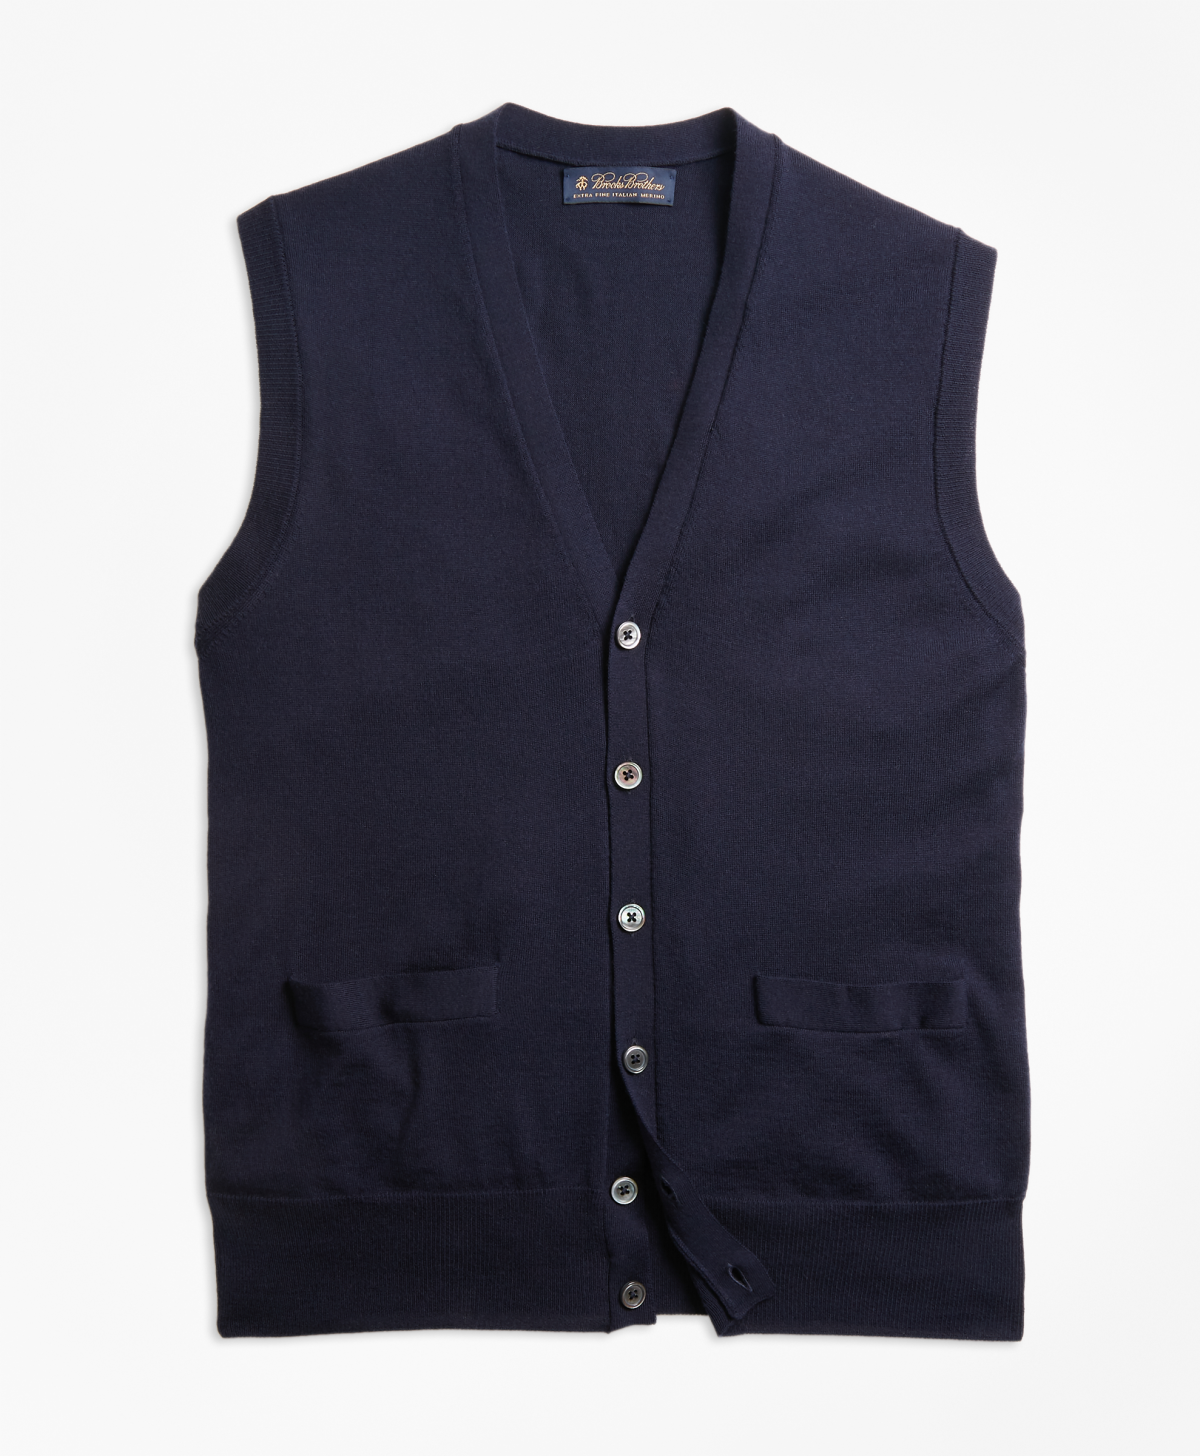 BrooksTech Merino Wool Button-Front Vest